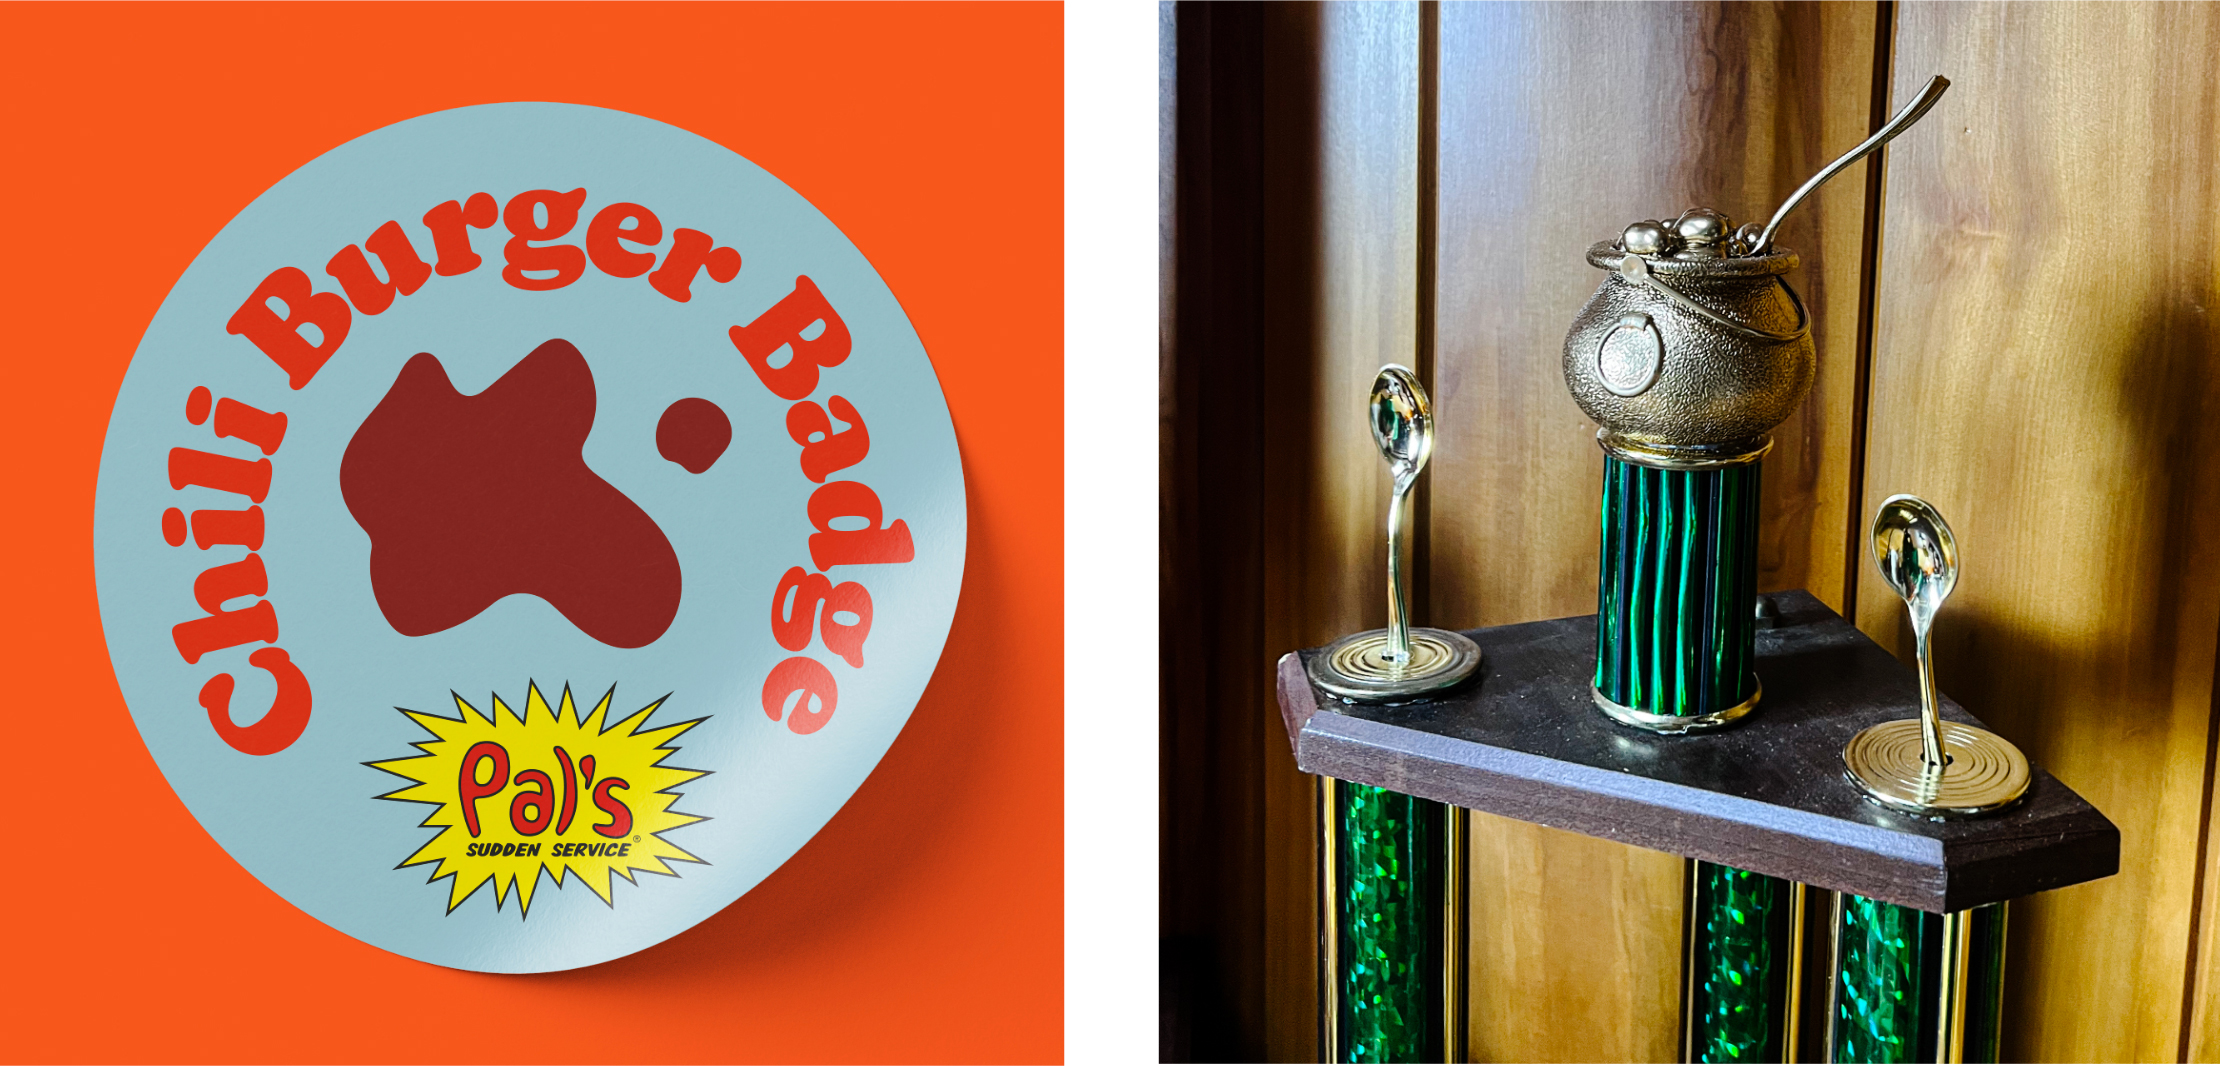 Creative Energy - Pal's Sudden Service - Chili Burger Badge & Trophy